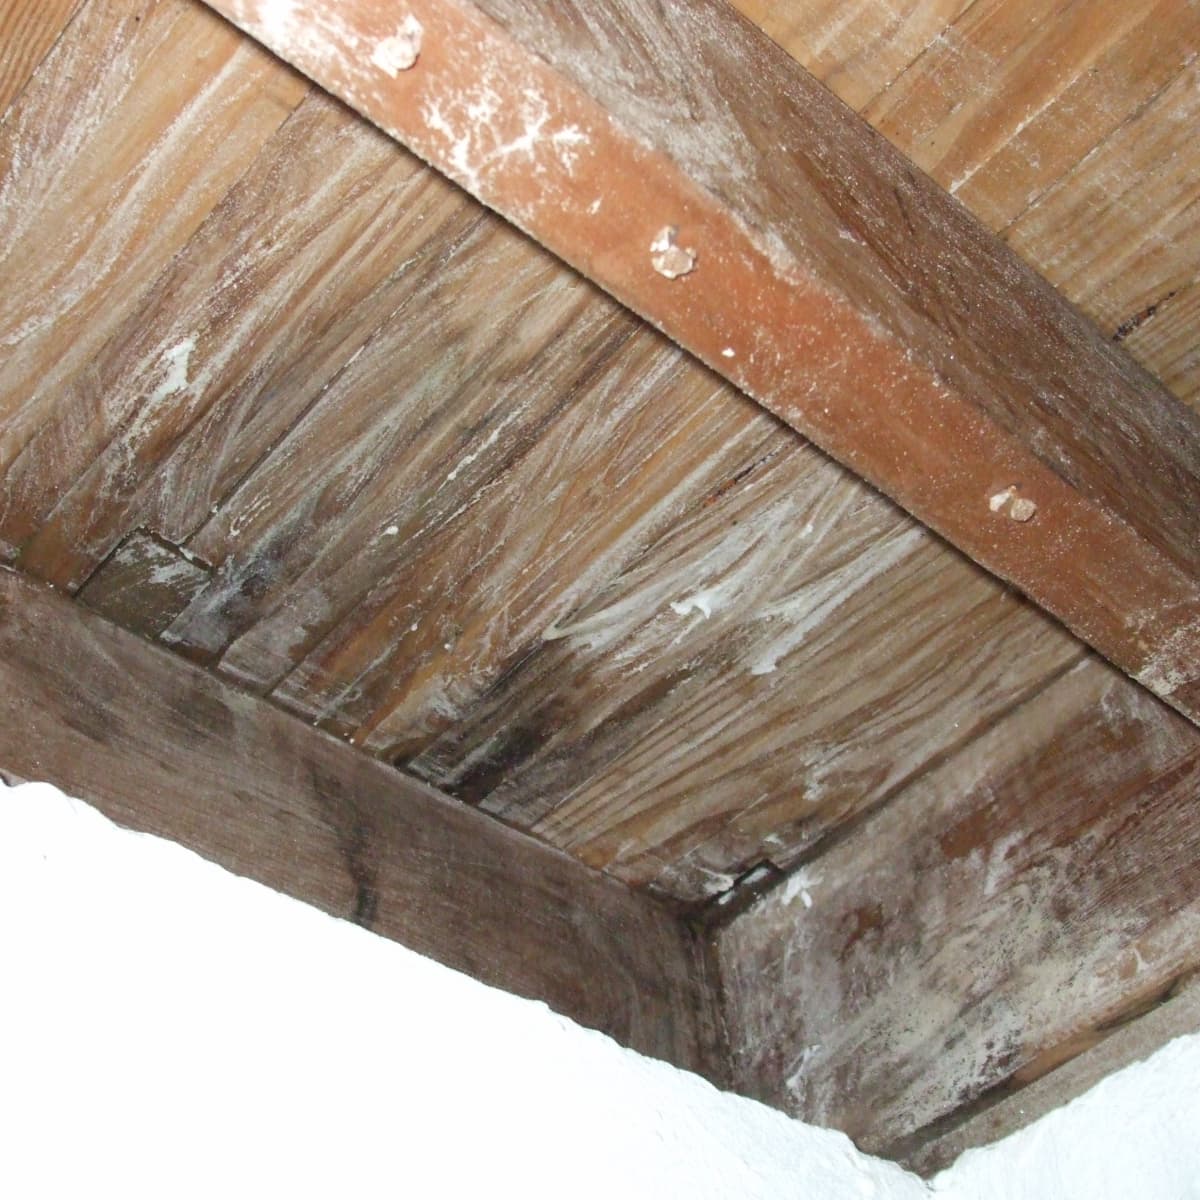 Mold Infestation On Wood With Borax, Mold On Hardwood Floors